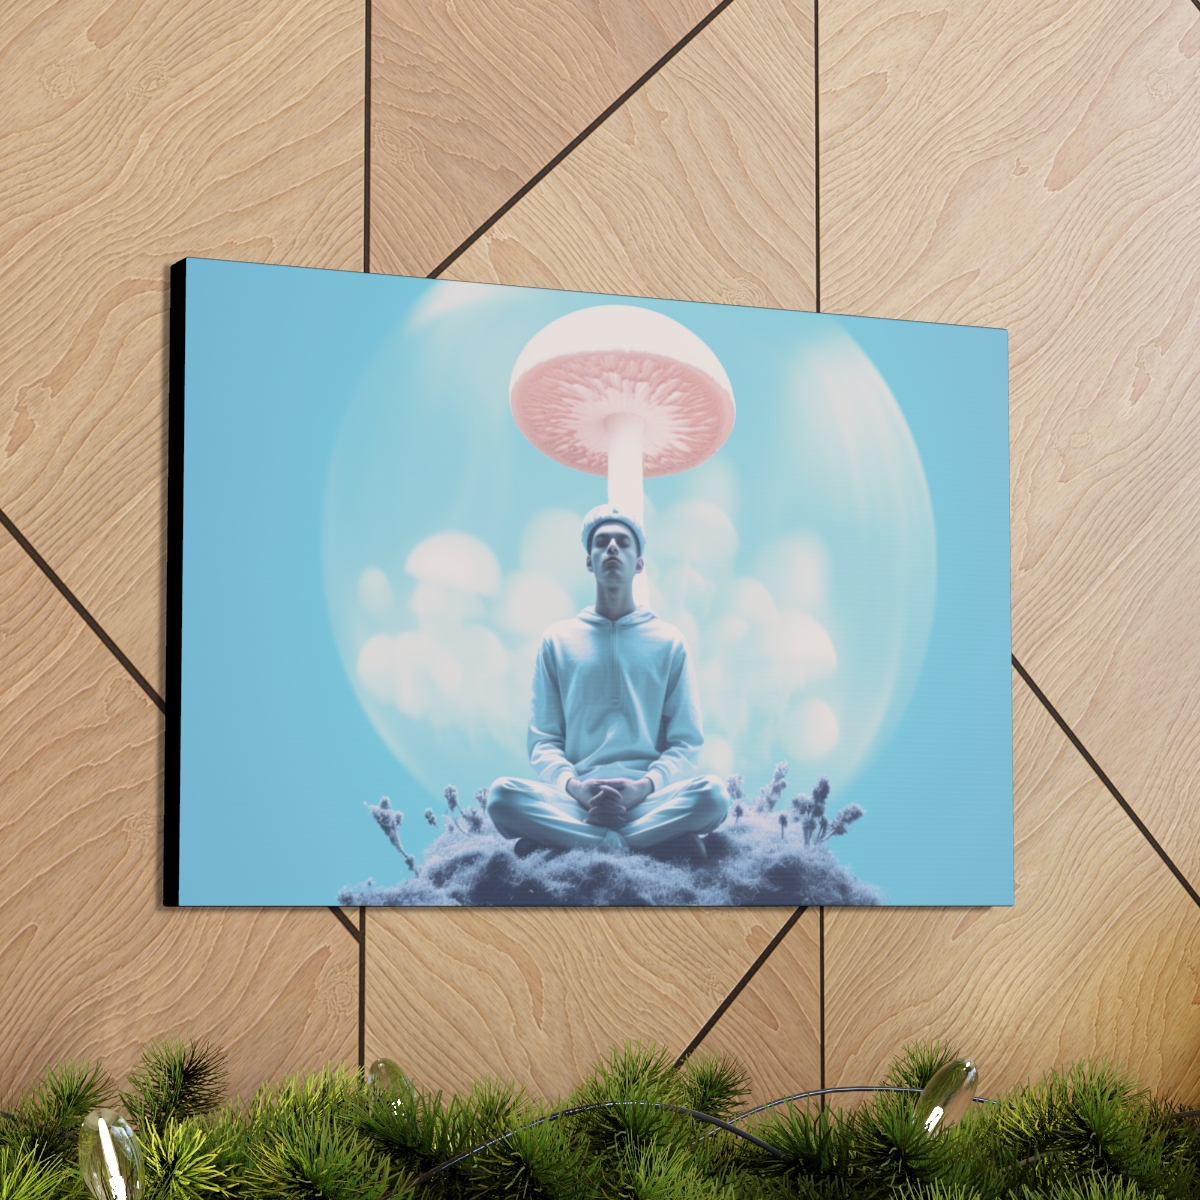 Psychedelic Mushroom Art: Gaining Wisdom